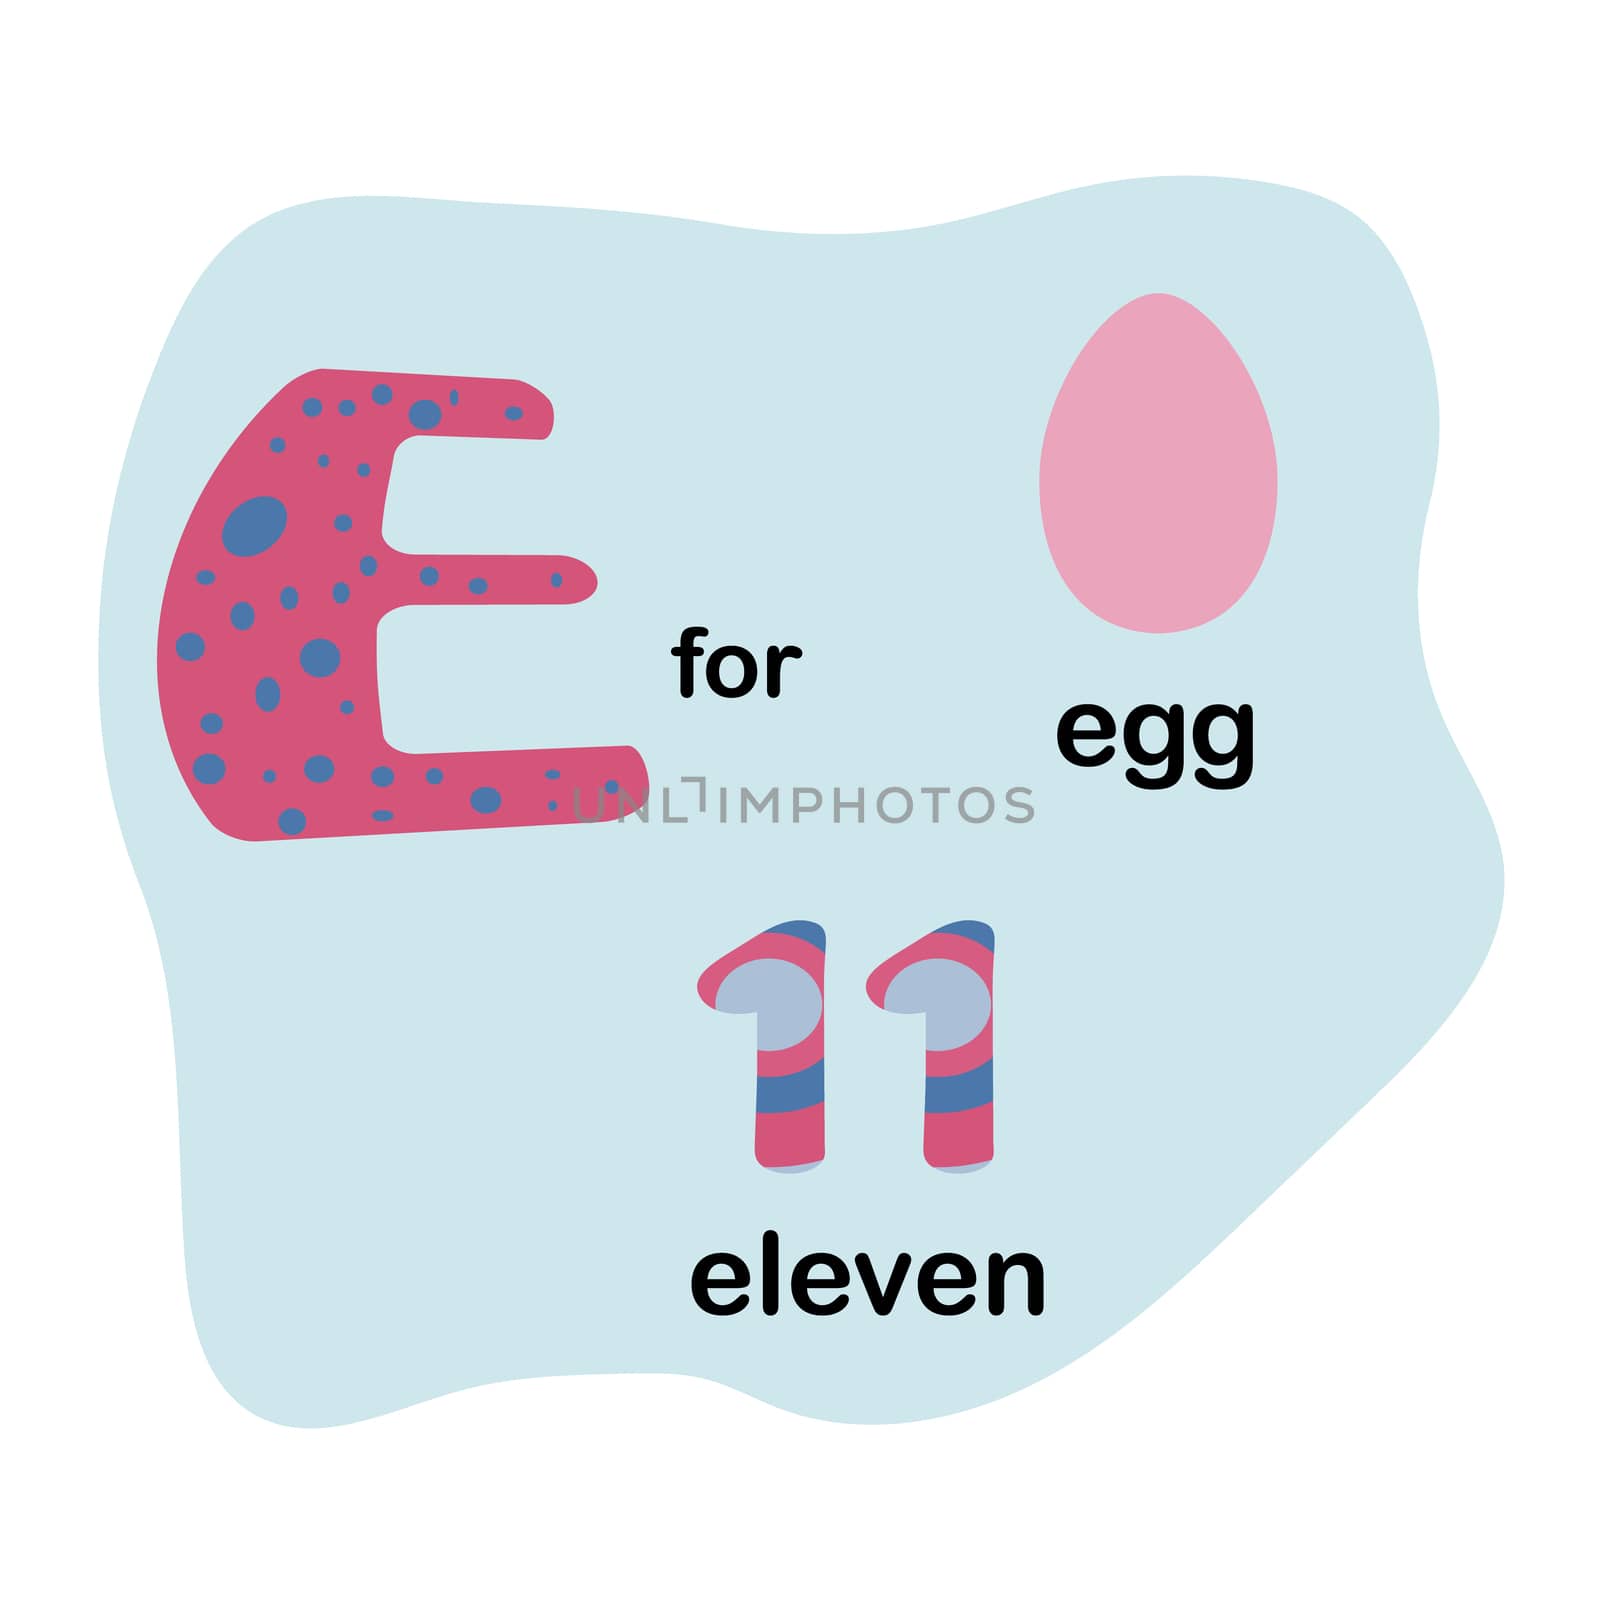 Children's Font in flat style illustration. Stylish multicoloured set.